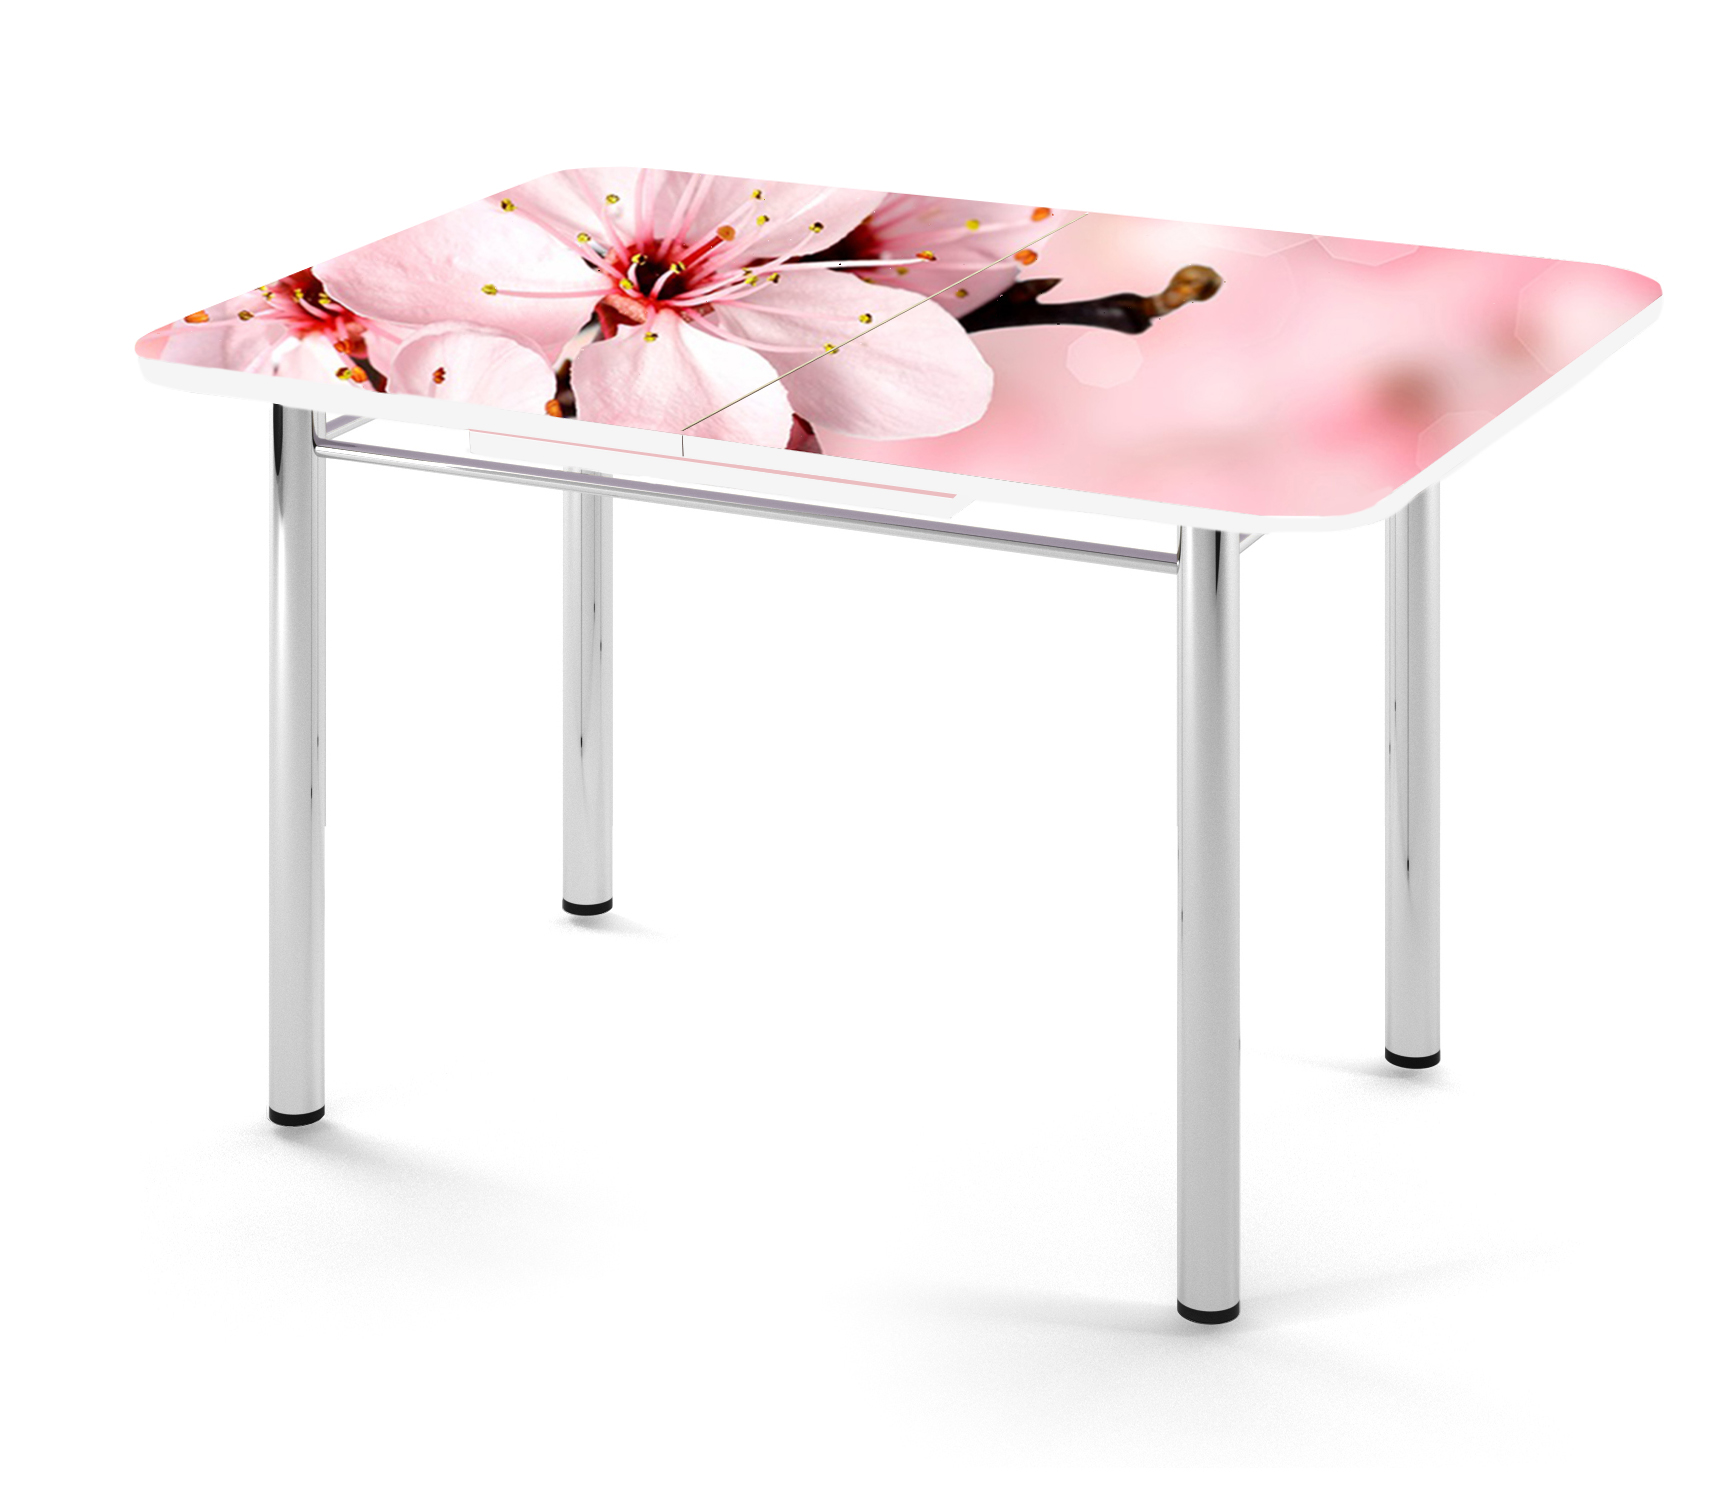 Torsby торсби стол хромированный глянцевый белый 135x85 см